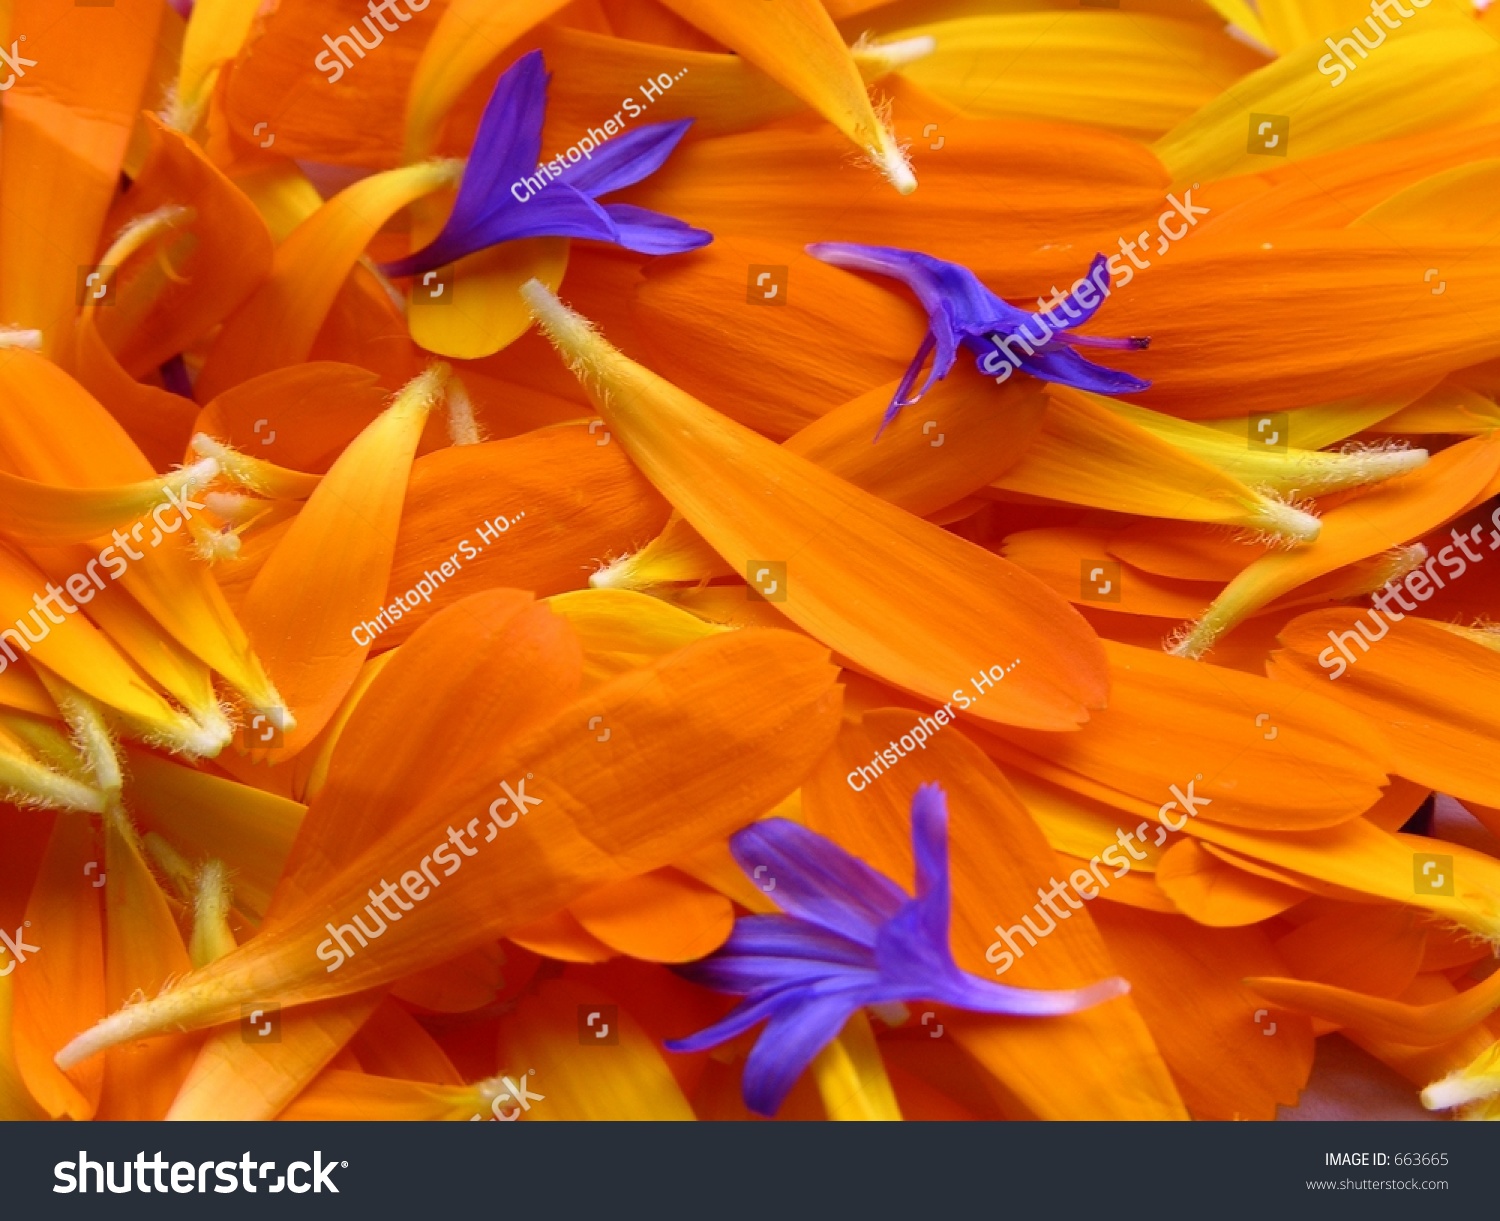 Flower Pedals Stock Photo 663665 : Shutterstock